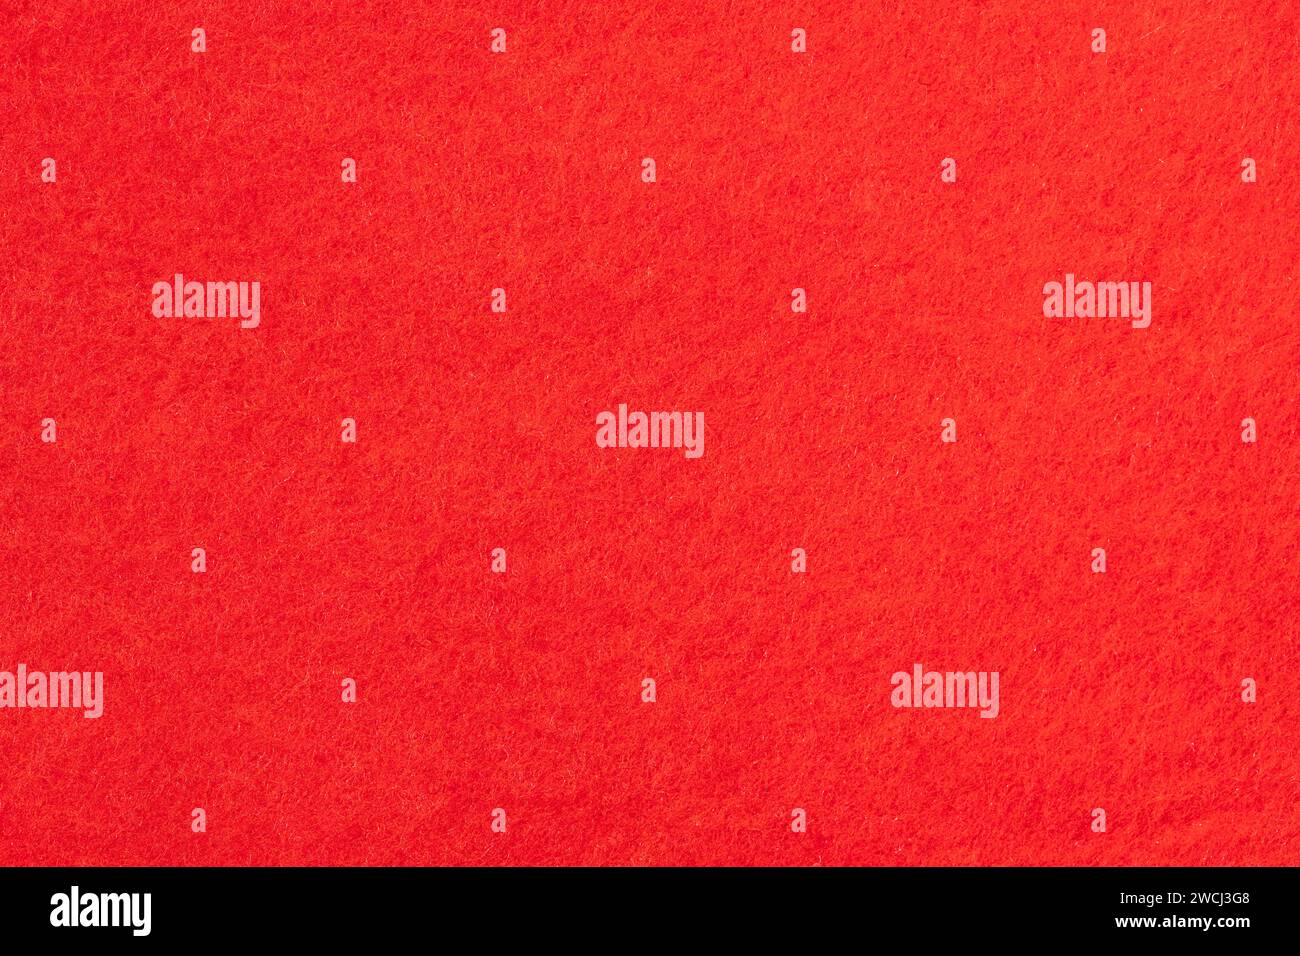 Red Felt fabric background texture. Full frame Stock Photo